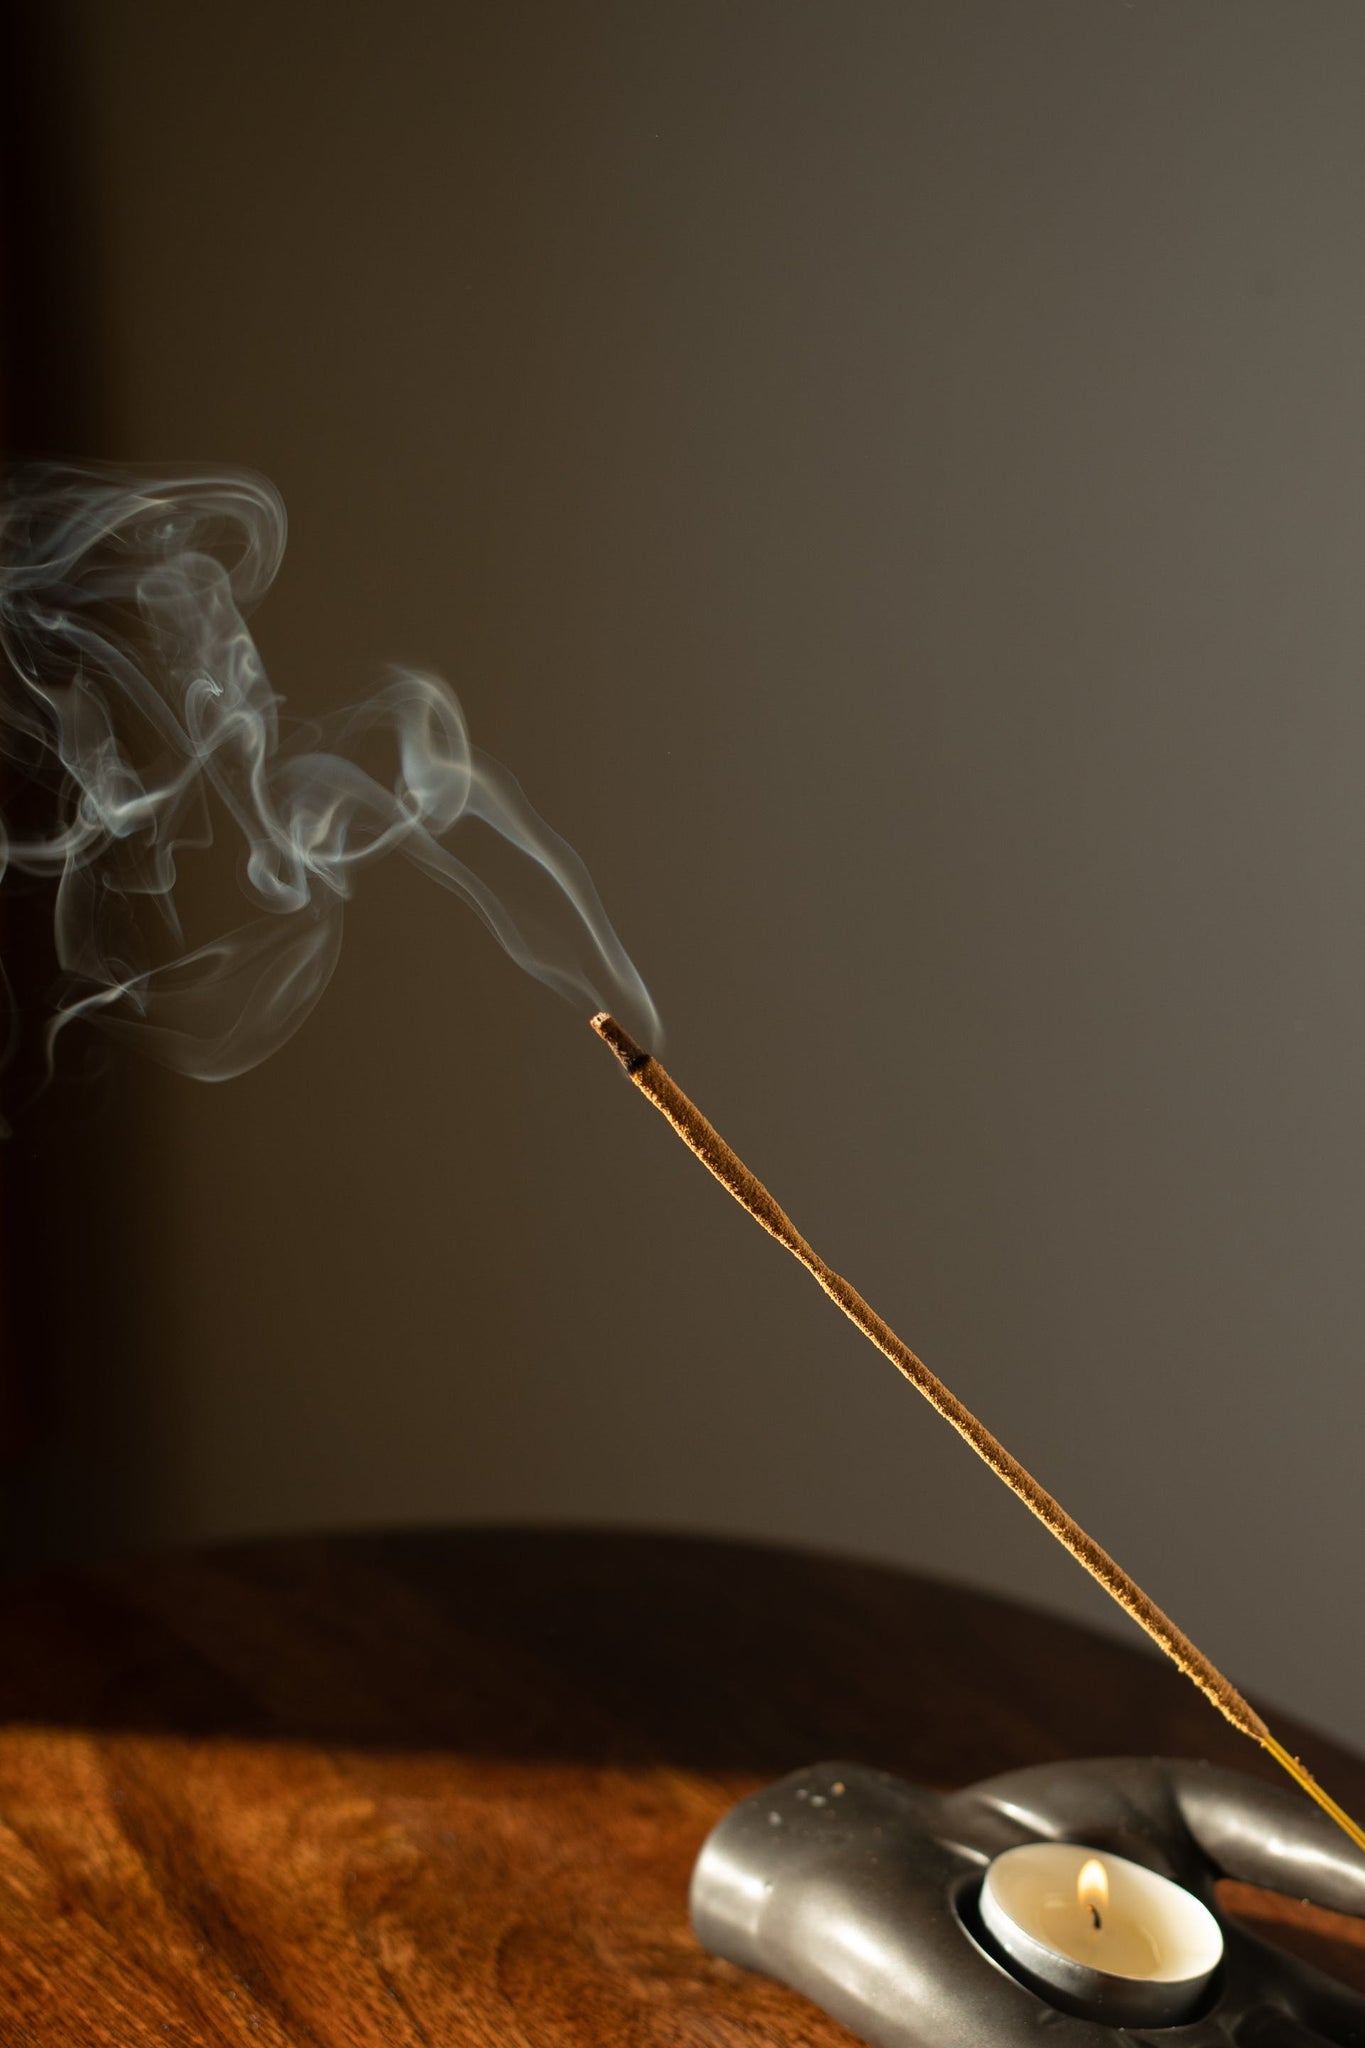 burning incense sticks